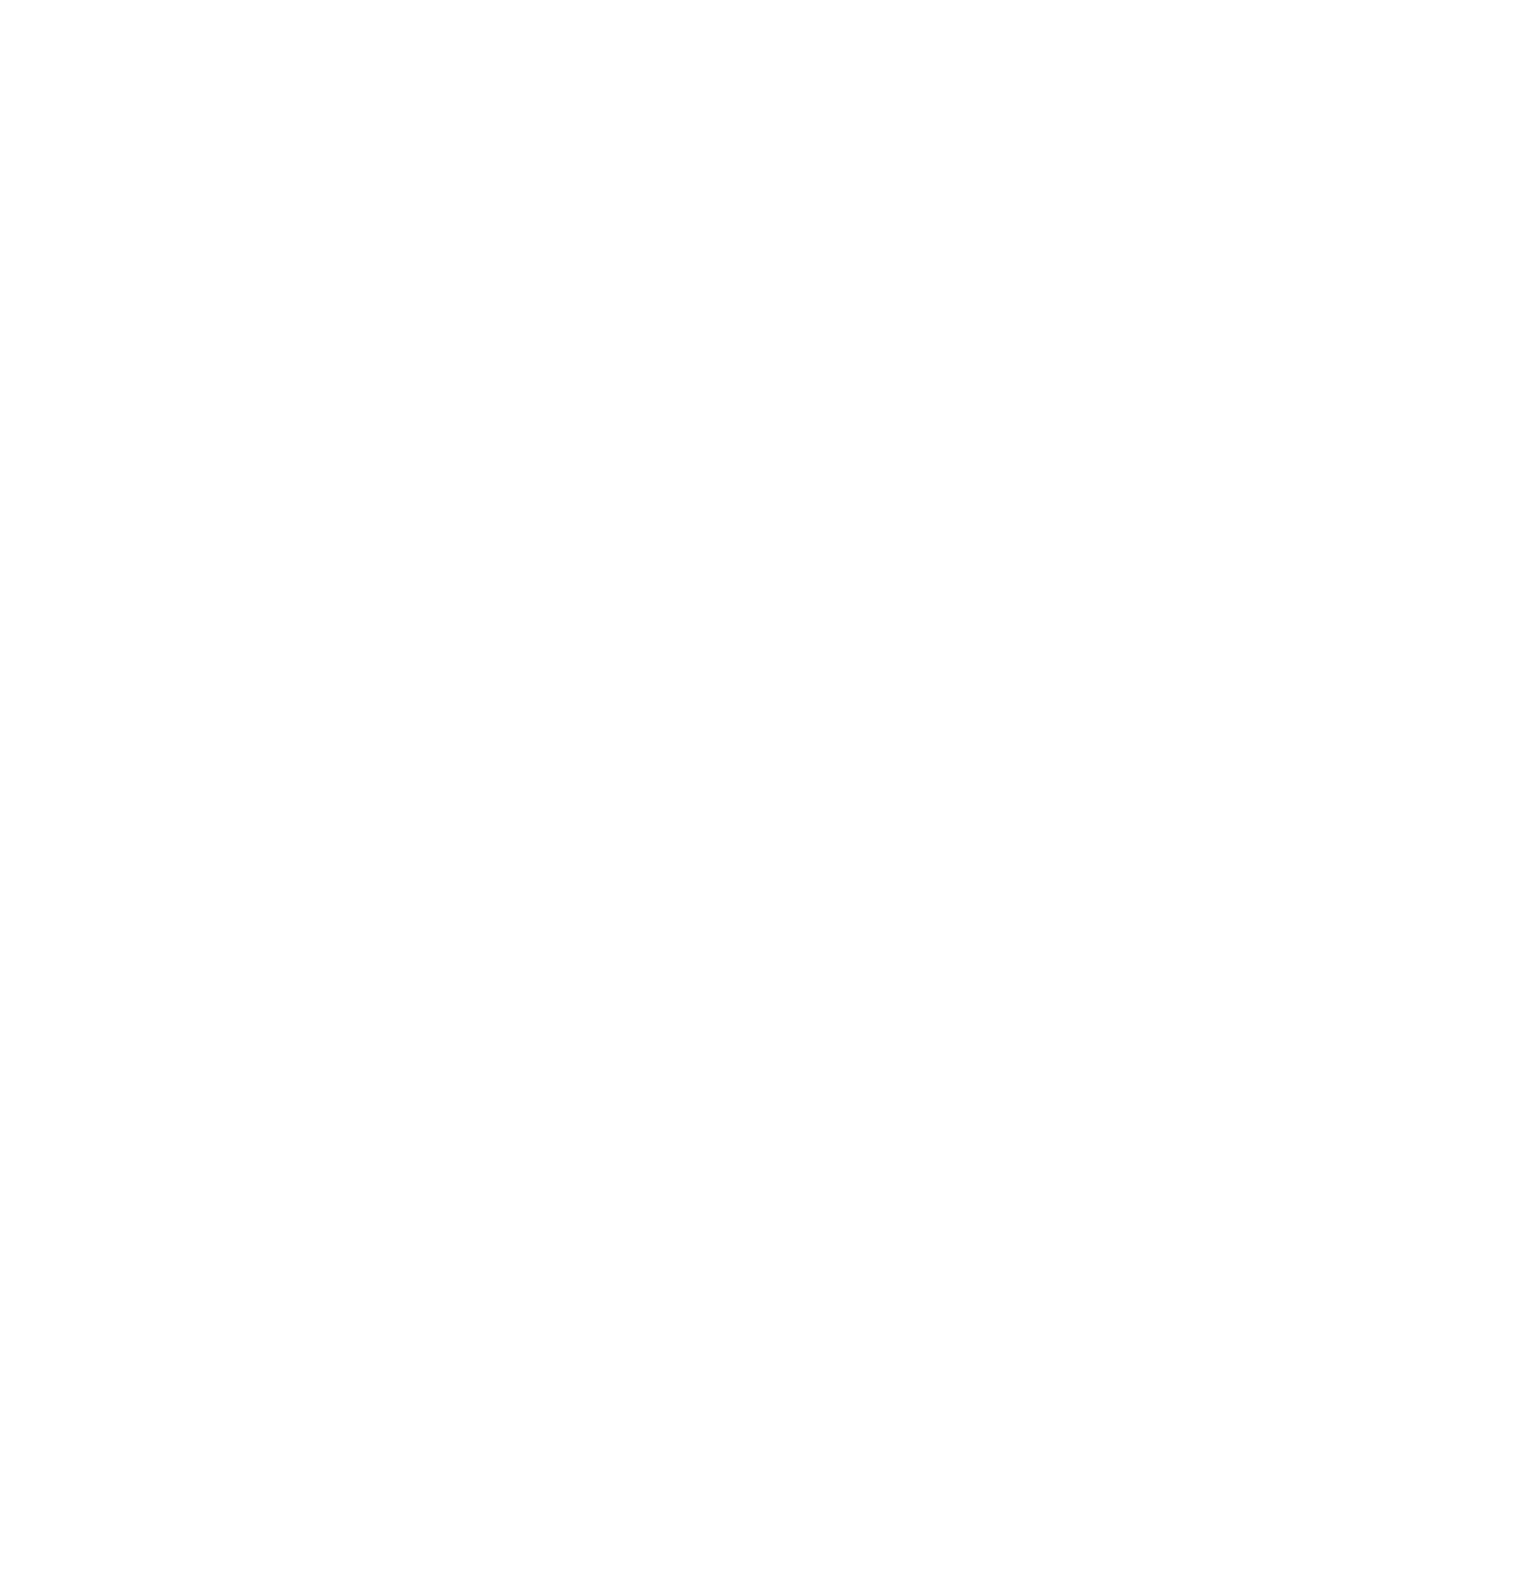 Government of Ontario logo